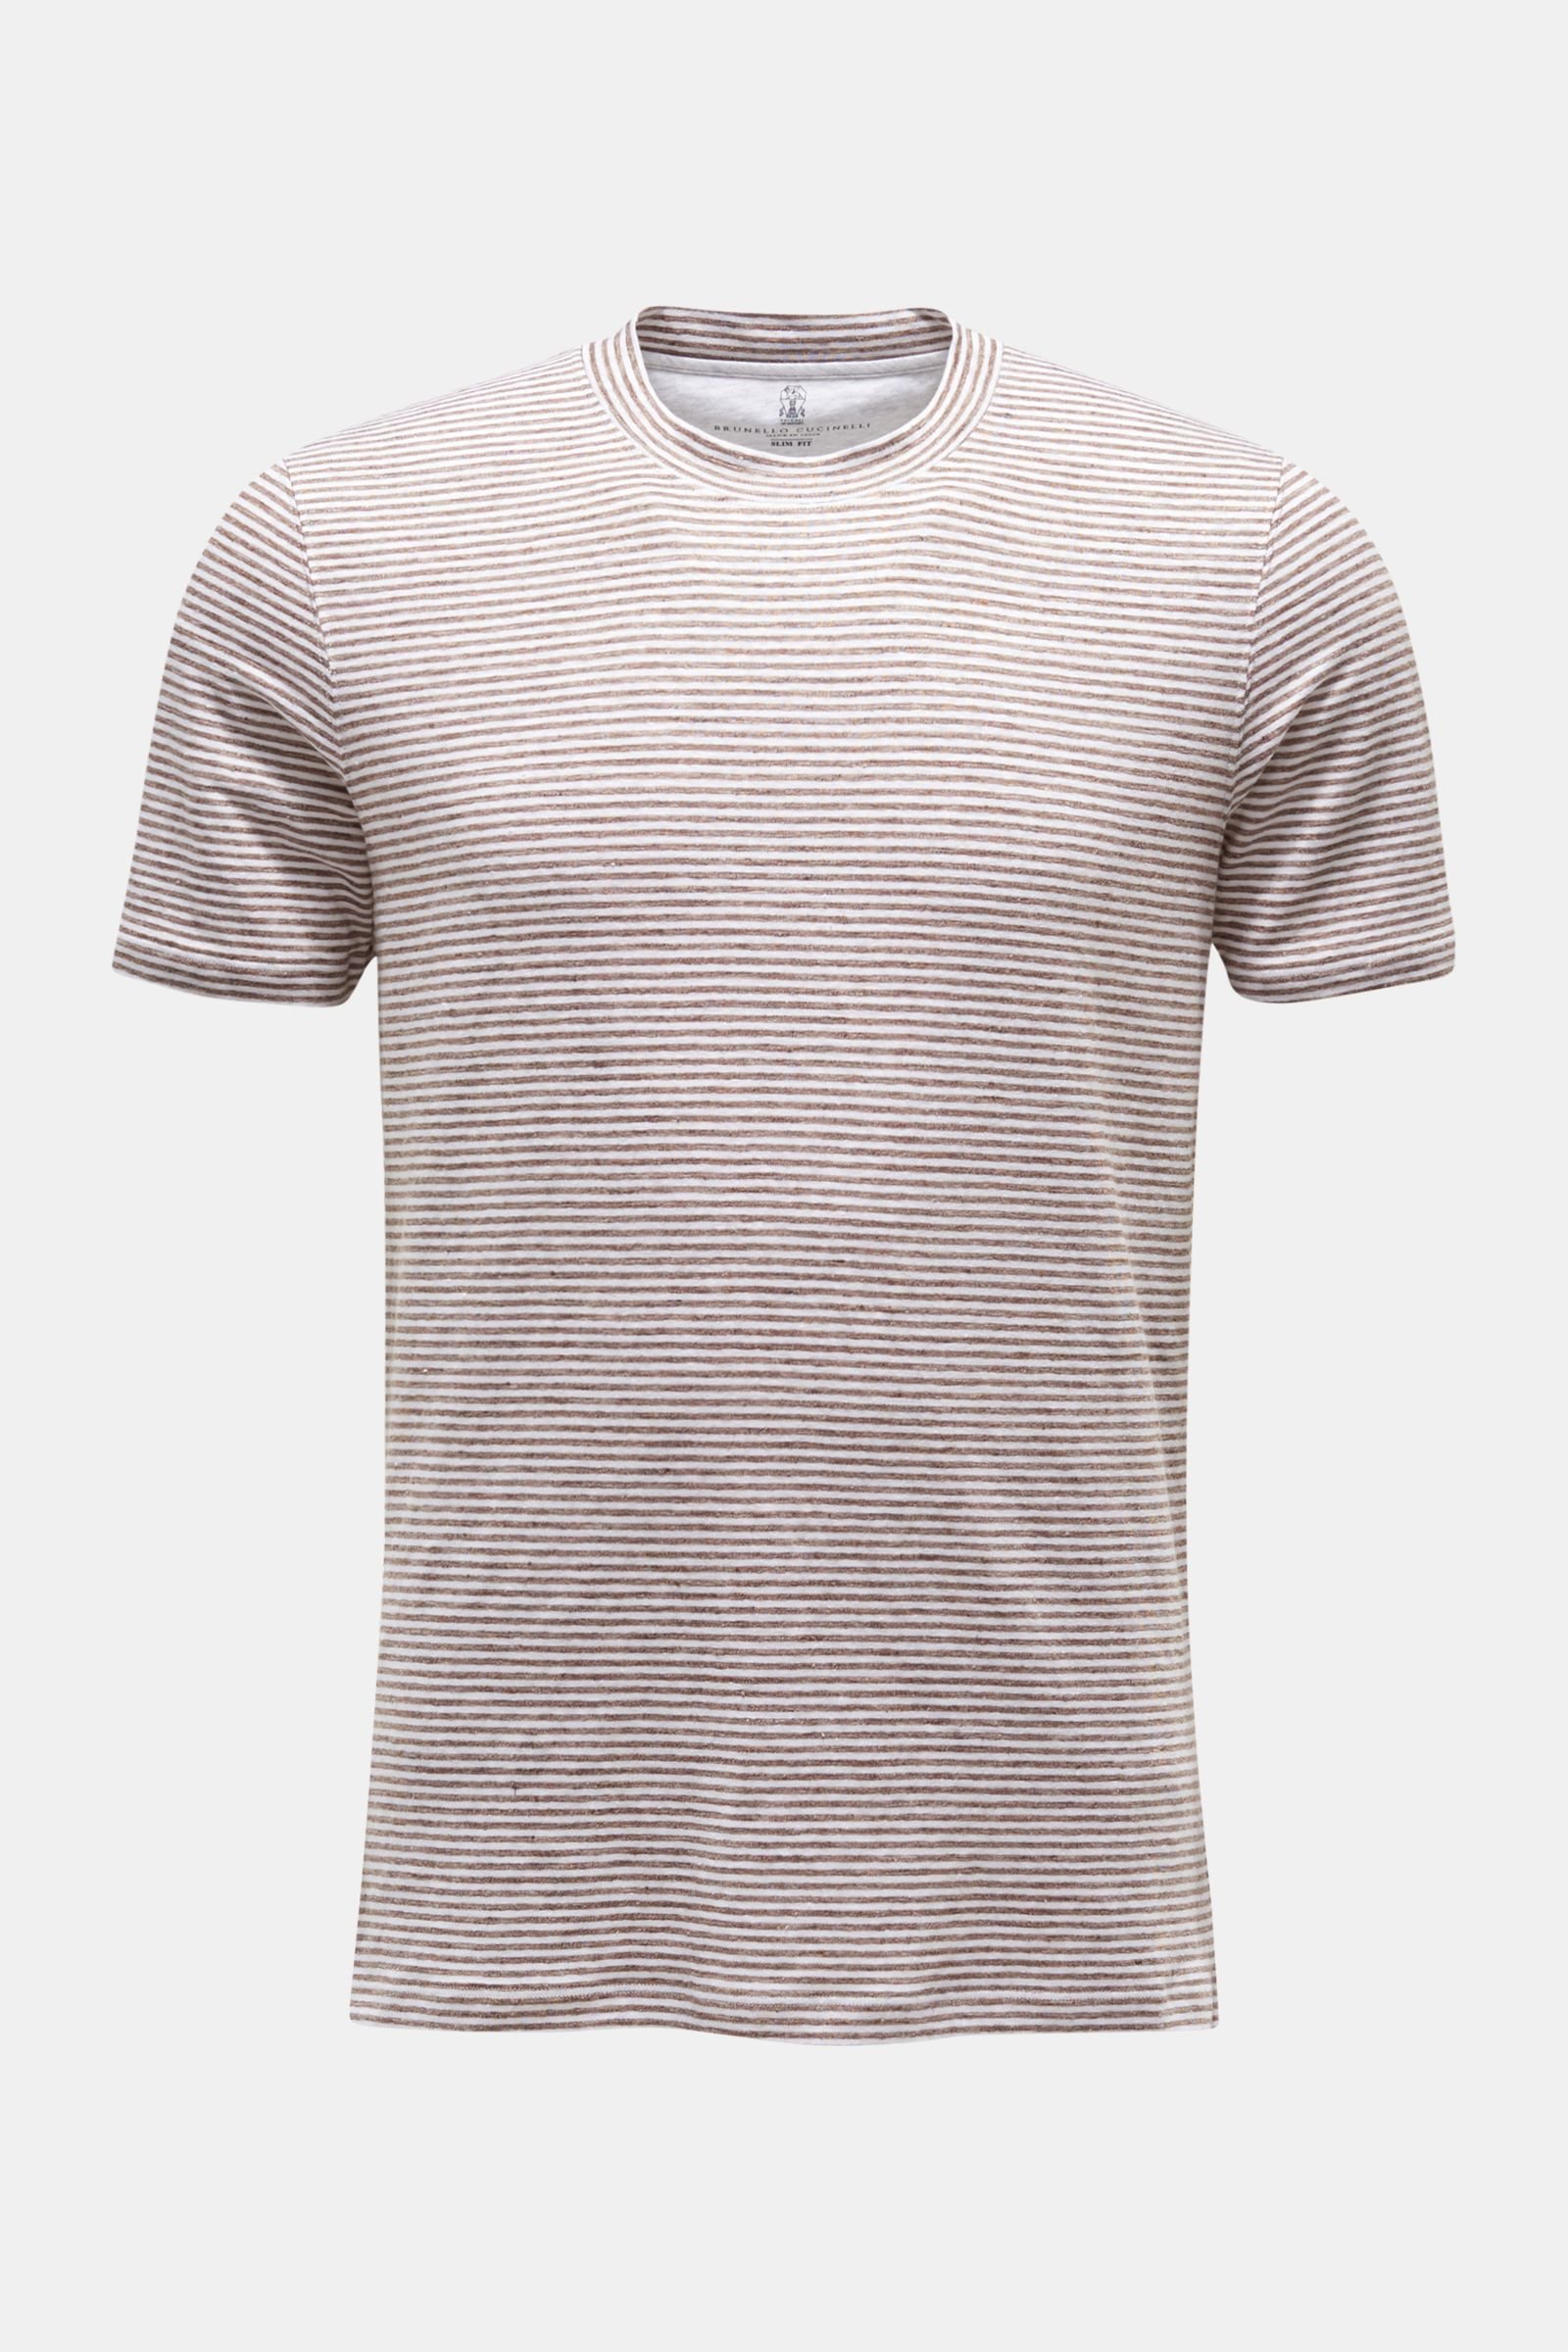 Crew neck T-shirt linen grey-brown/white striped